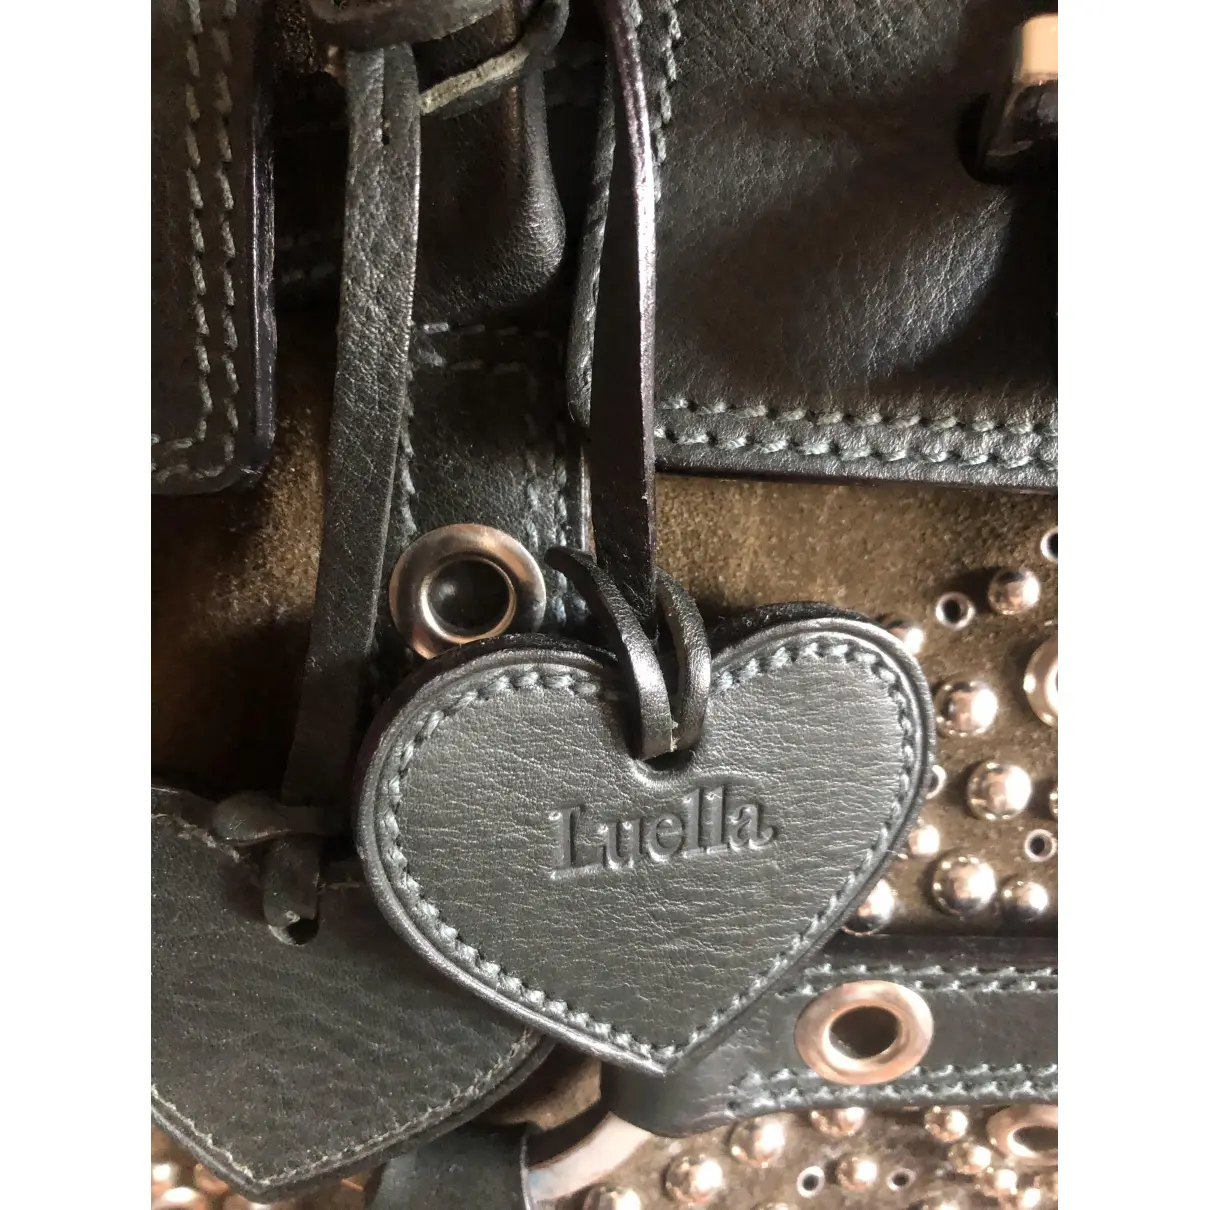 Leather handbag Luella